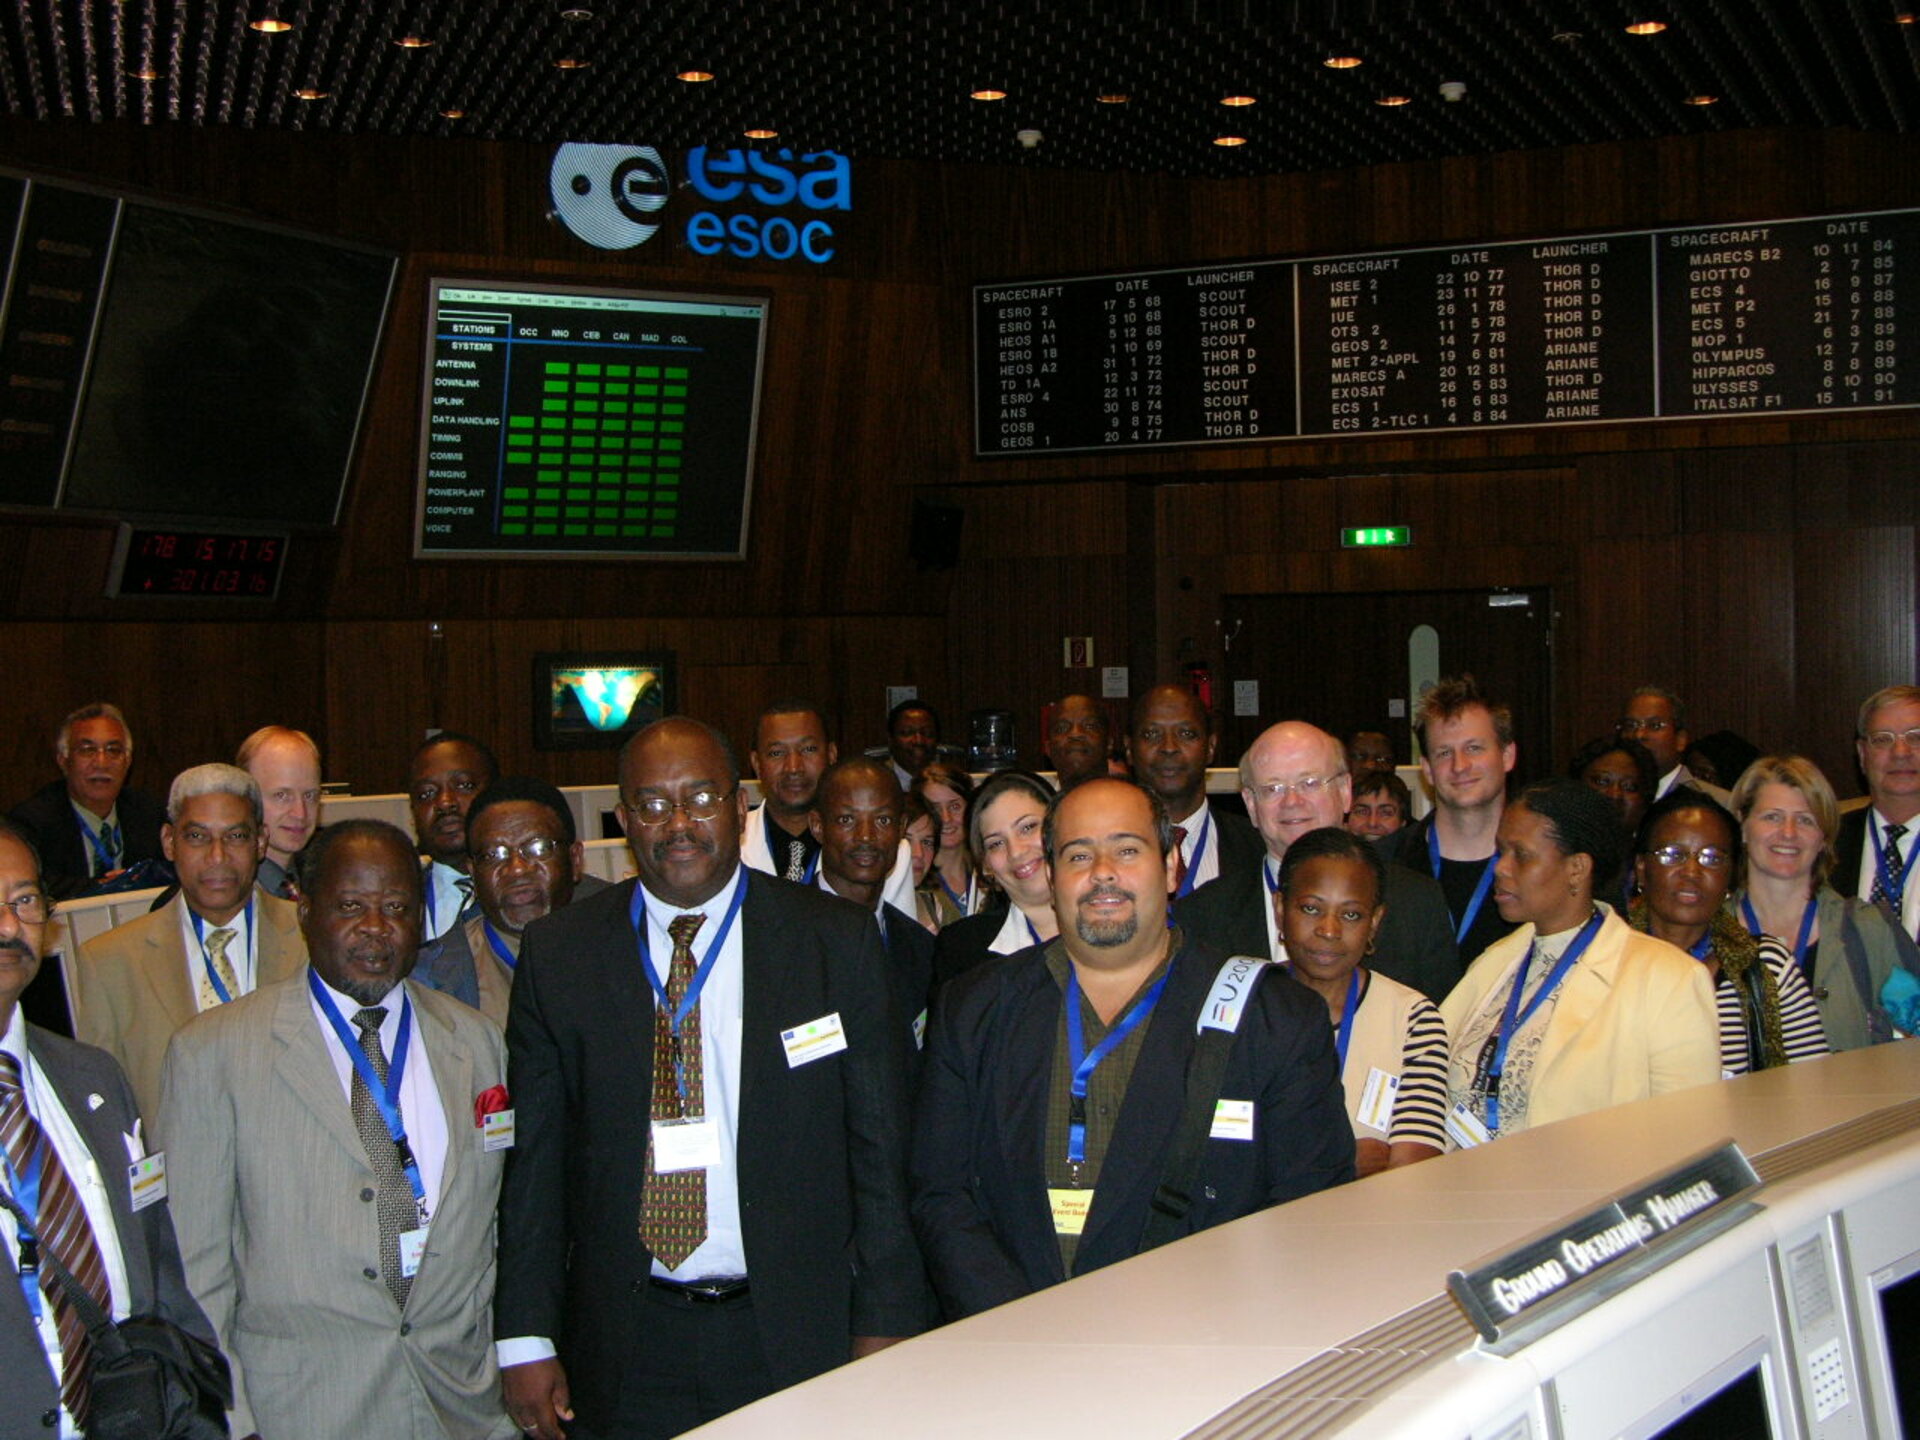 EU and ACP delegates visit the Main Control Room at ESOC, Darmstadt